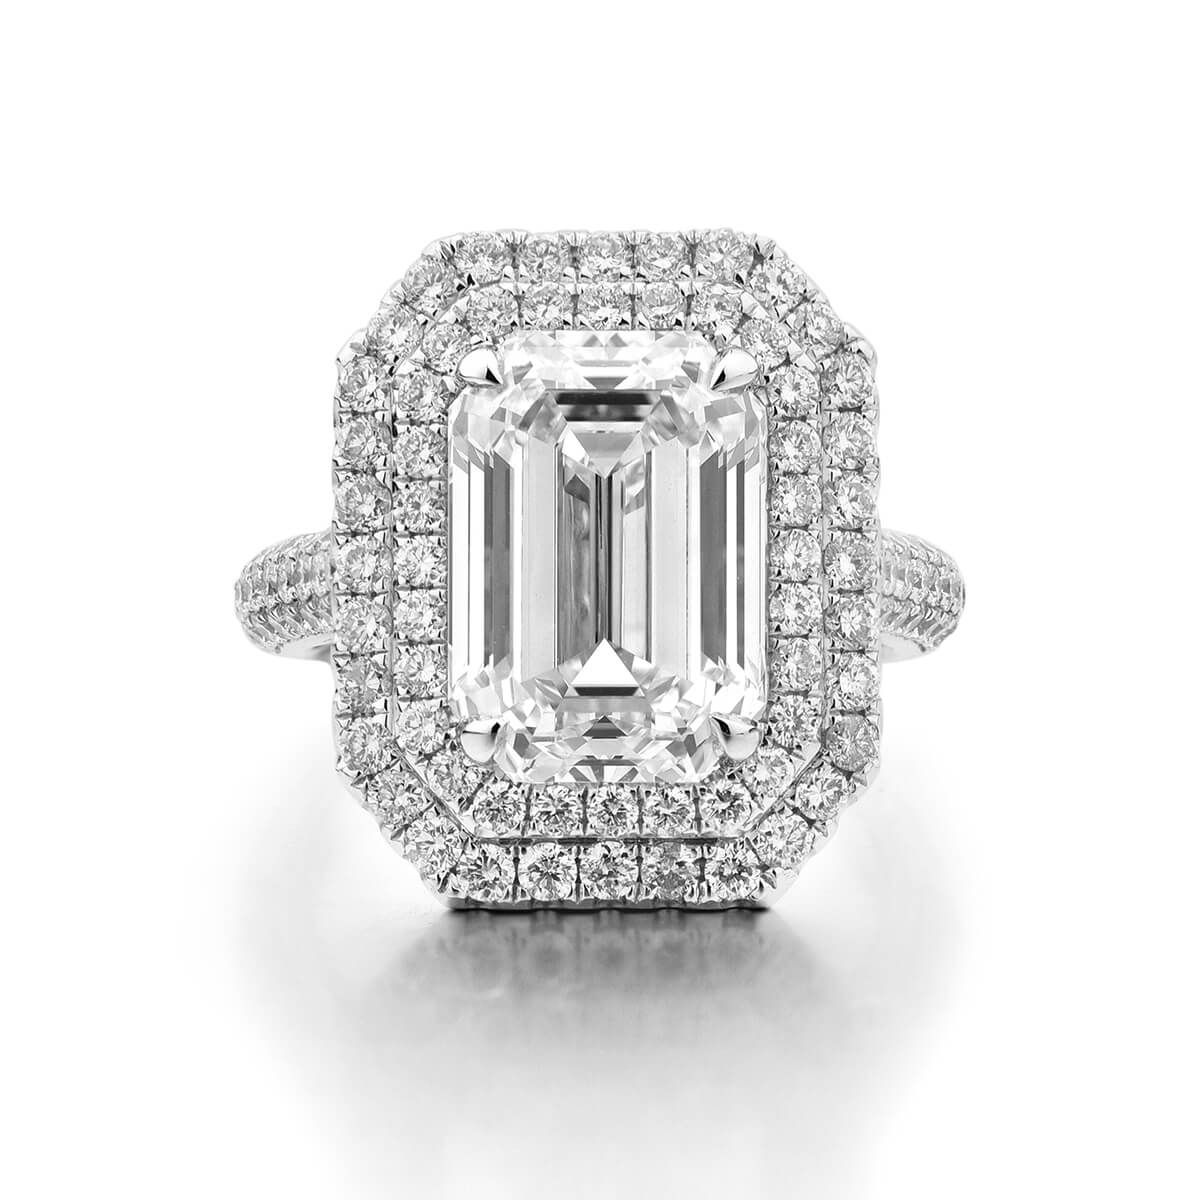  White Diamond Ring, 7.78 Ct. TW, Emerald shape, GIA Certified, 2155170379